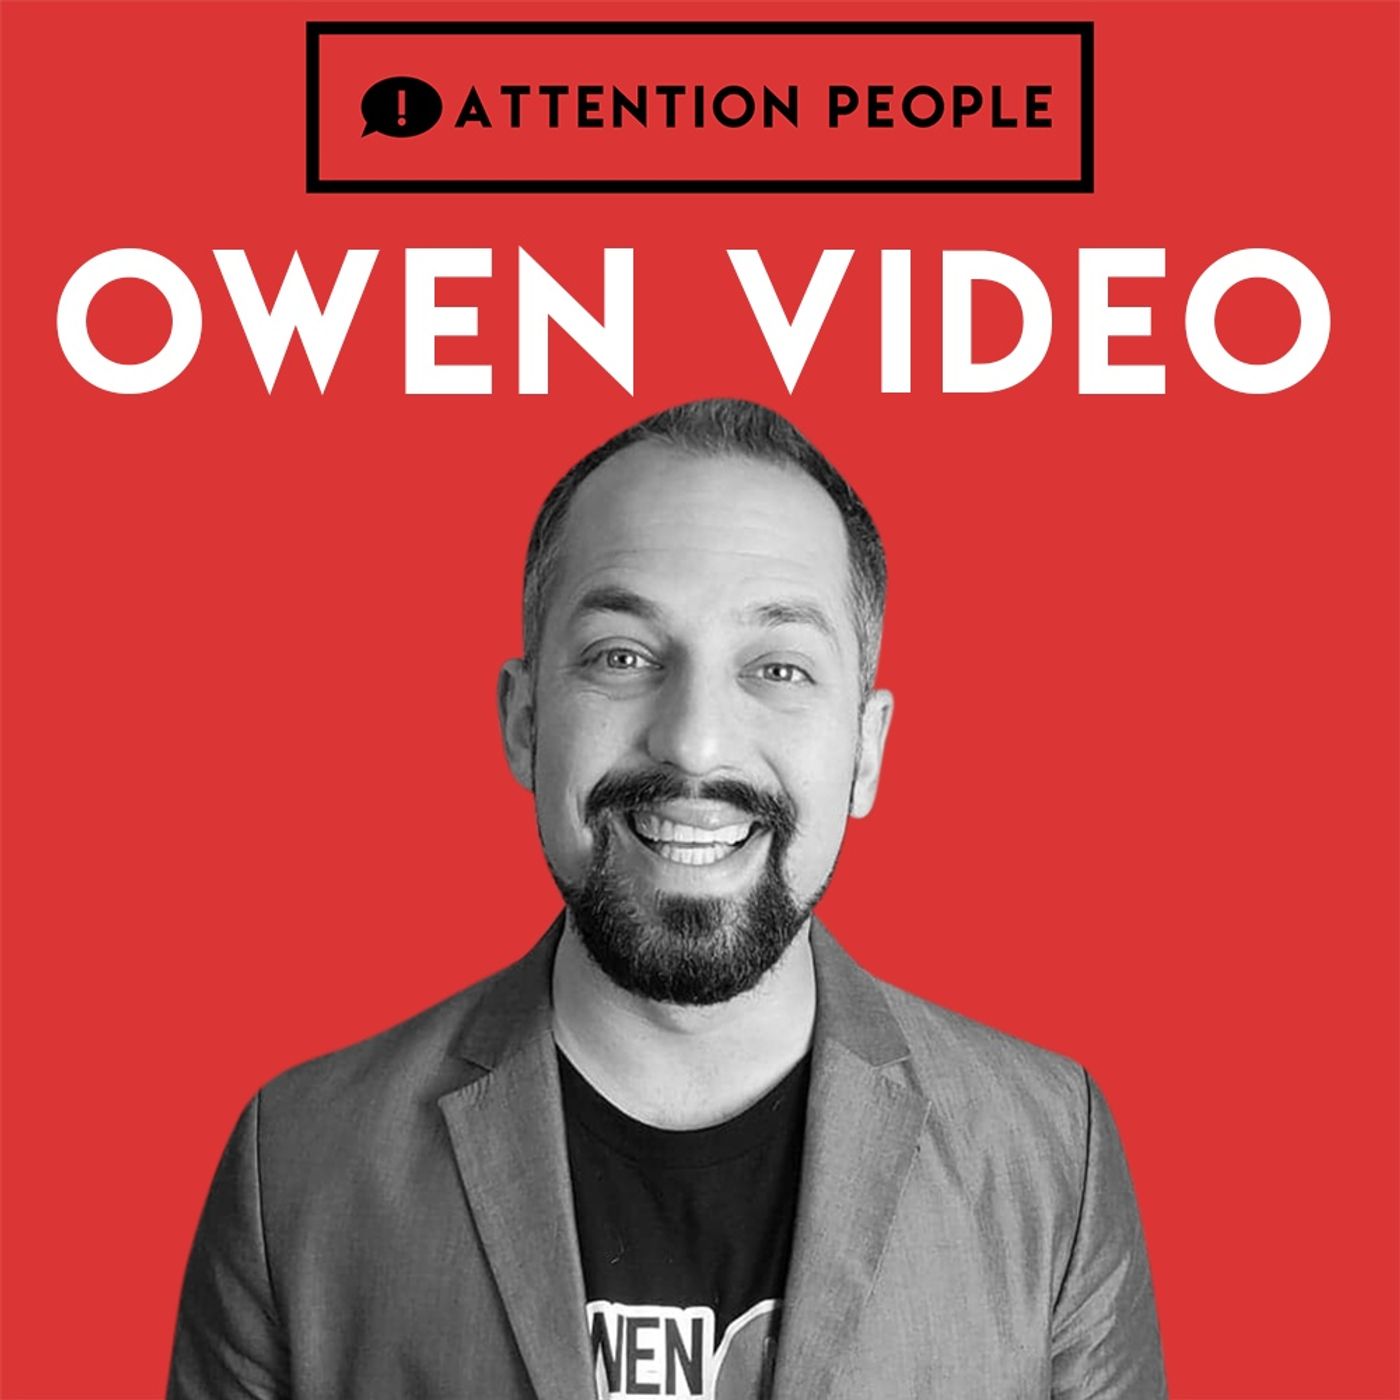 Owen Video - Get Views, Build Audience & Make Money